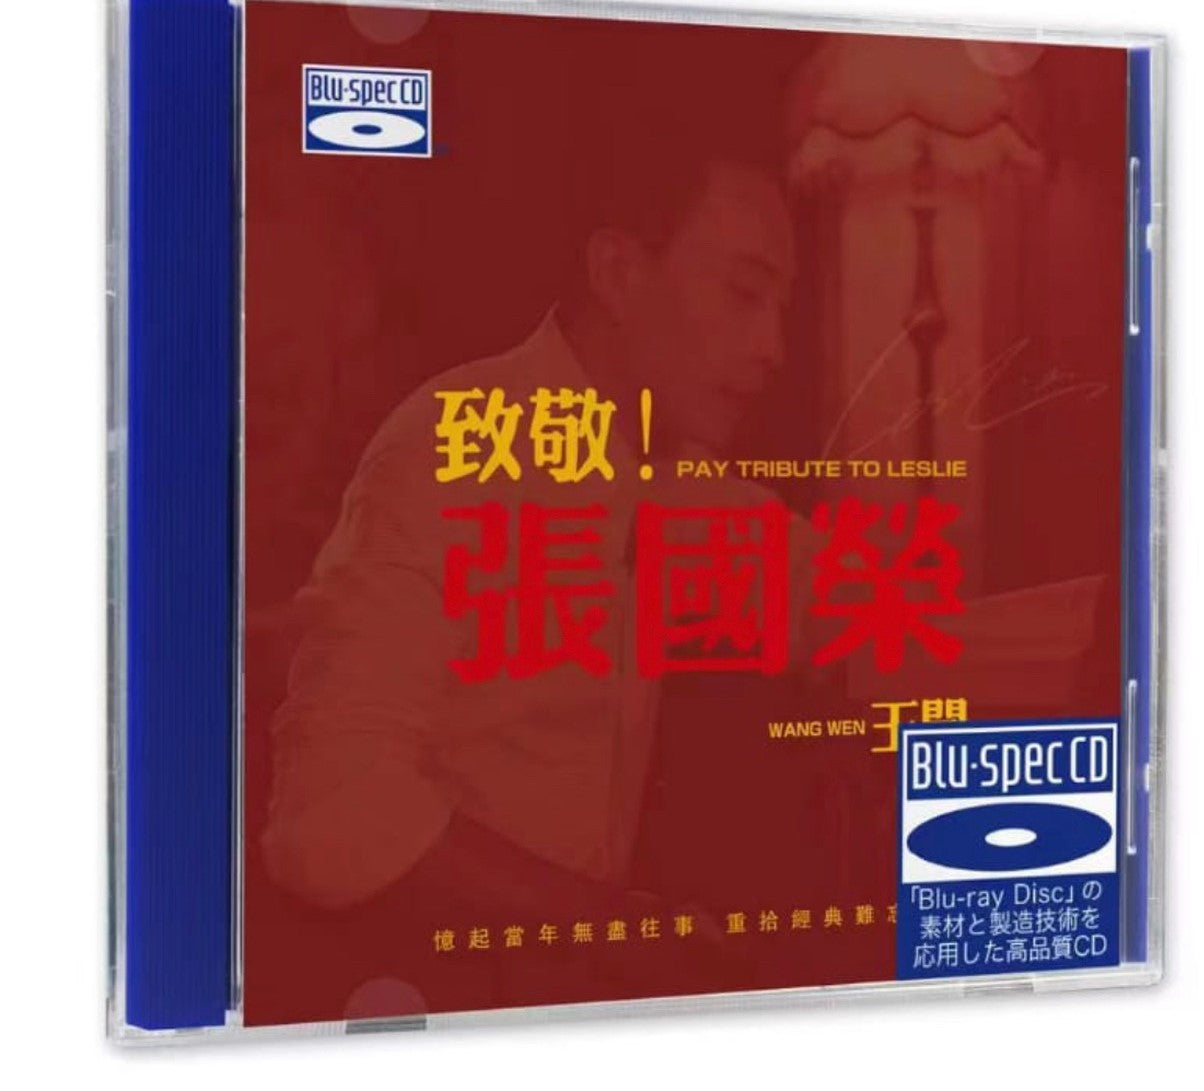 WANG WEN 王聞 - 致敬張國榮 PLAY TRIBUTE TO LESLIE (BLU-SPEC) CD